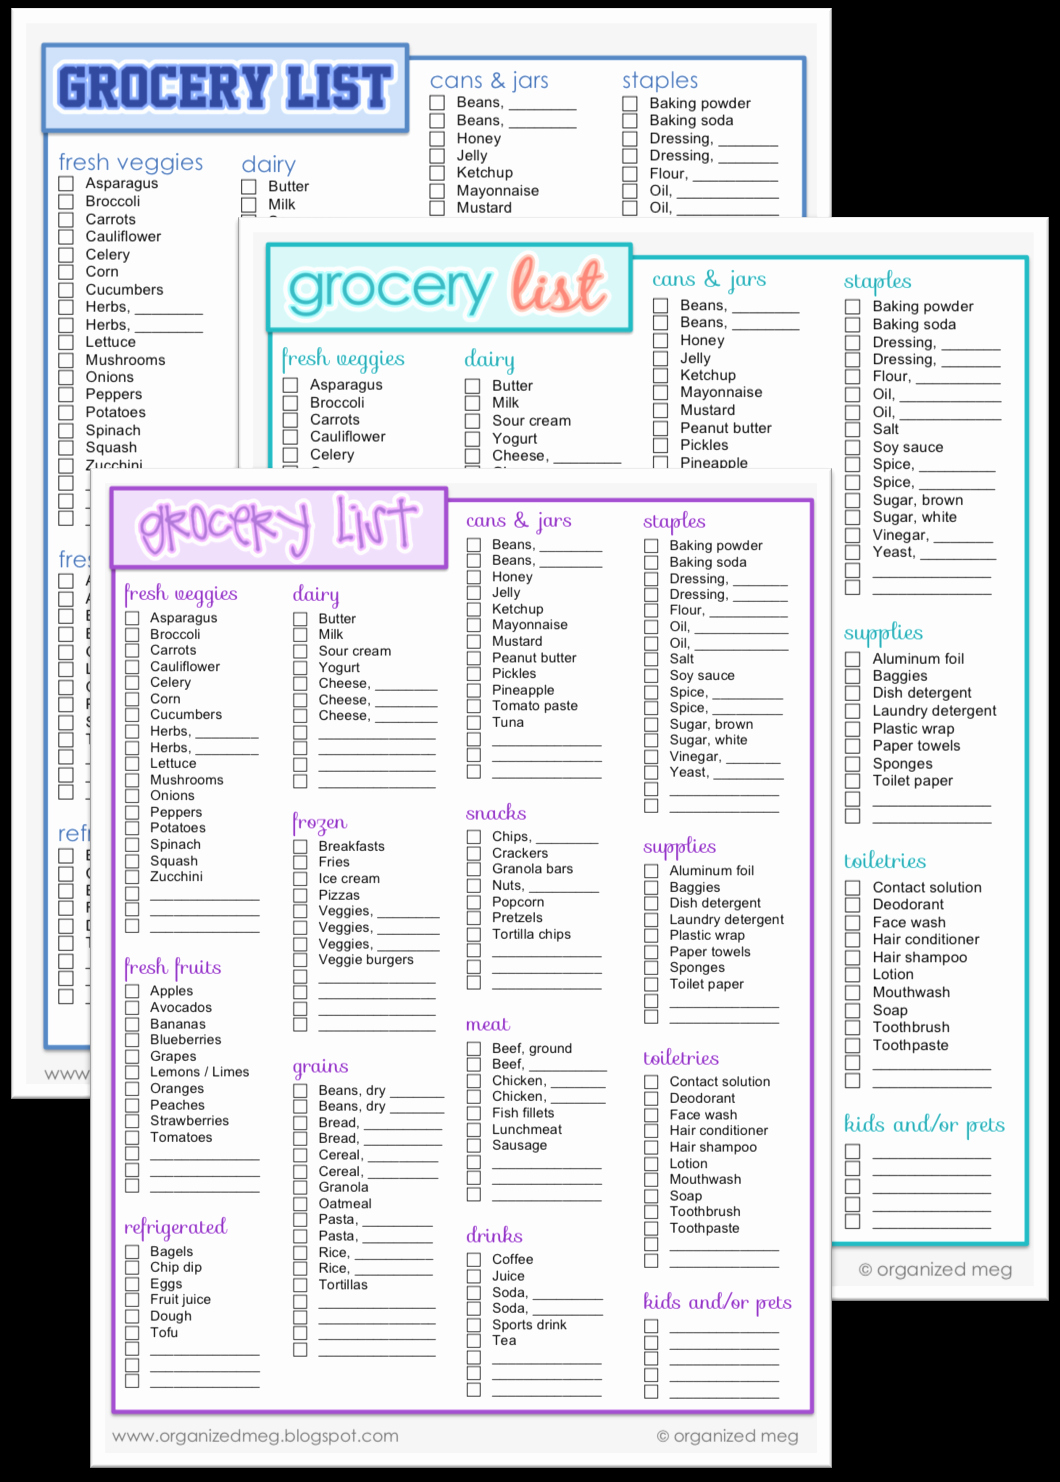 Grocery List by Aisle Template Elegant organized Meg Grocery List Printables